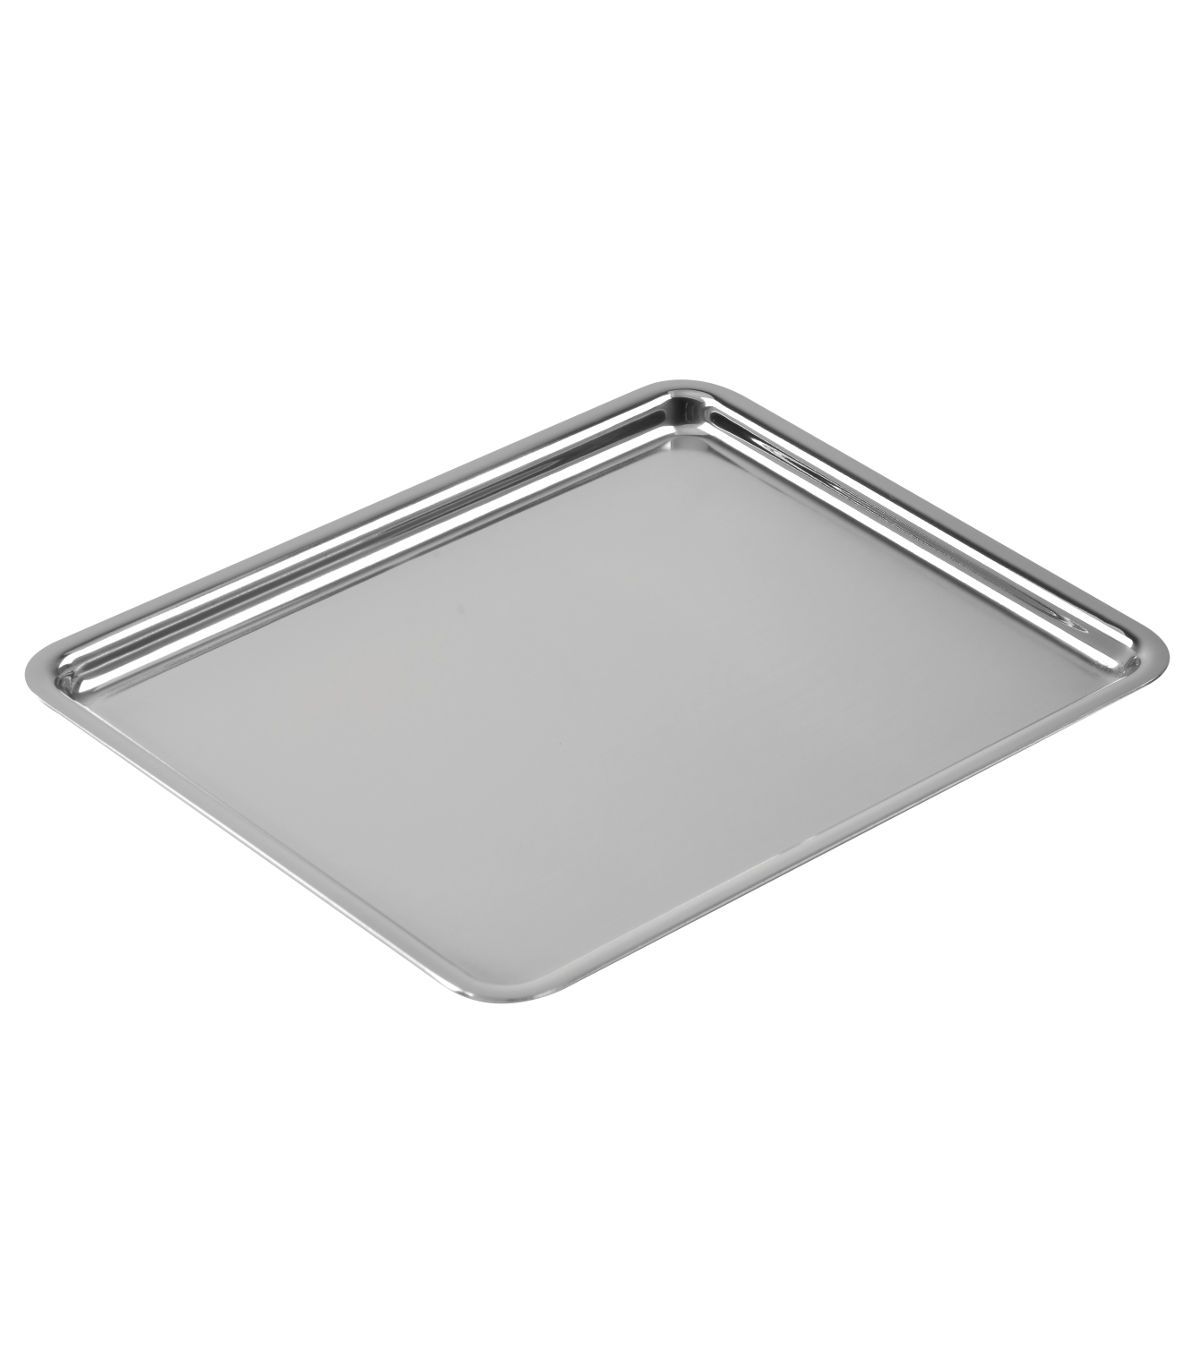 Pastry tray 20 x 16 cm stainless steel 18/10 : Stellinox